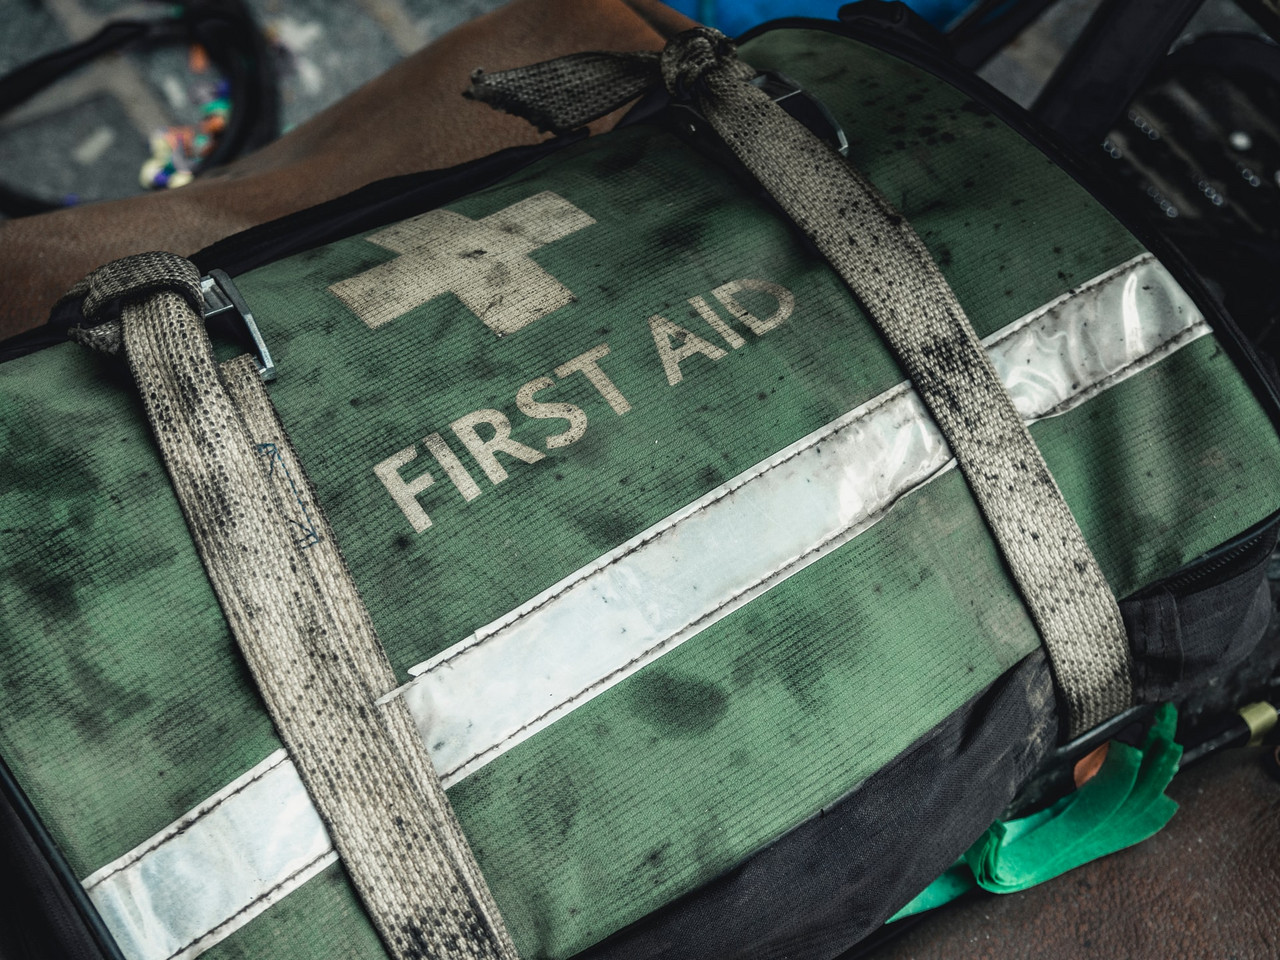 Where to learn vital first aid skills